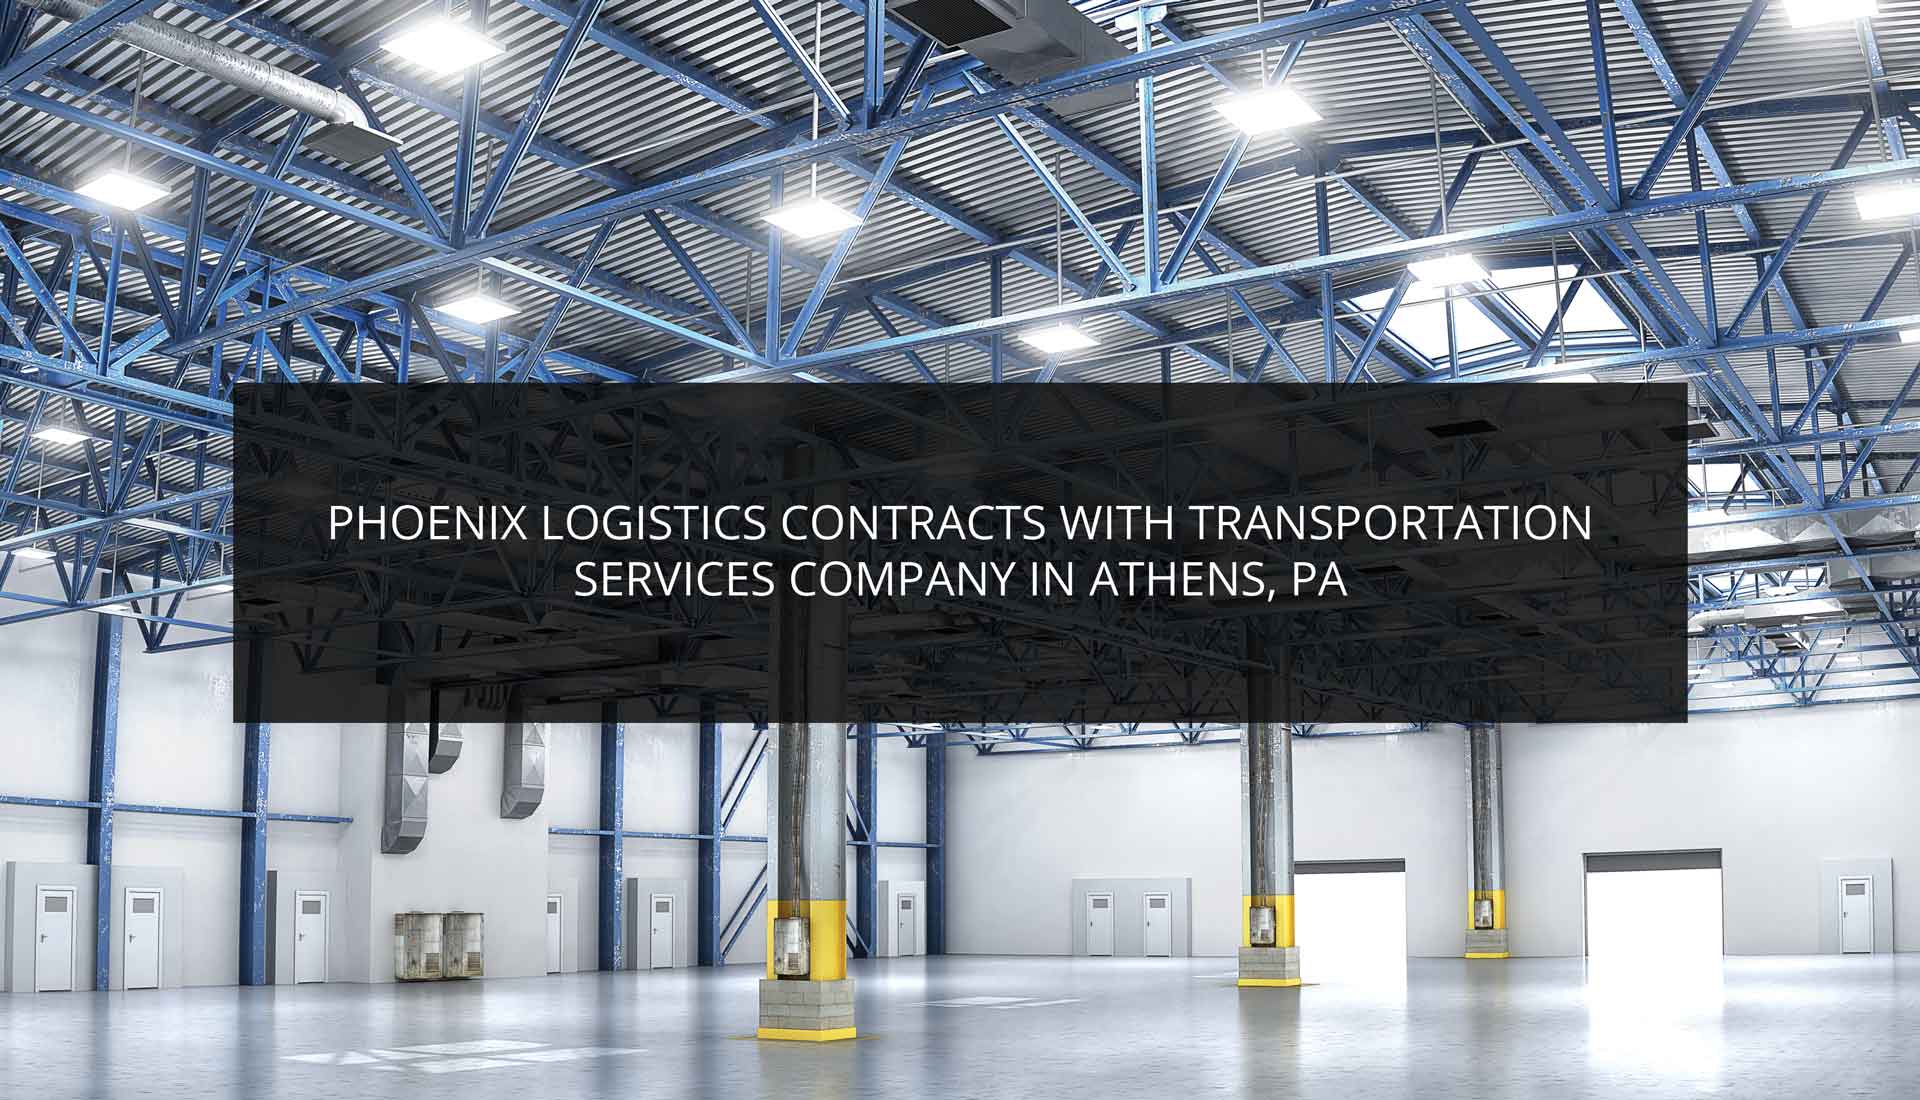 Phoenix Logistics | Strategic Real Estate. Applied Technology. Tailored Service.